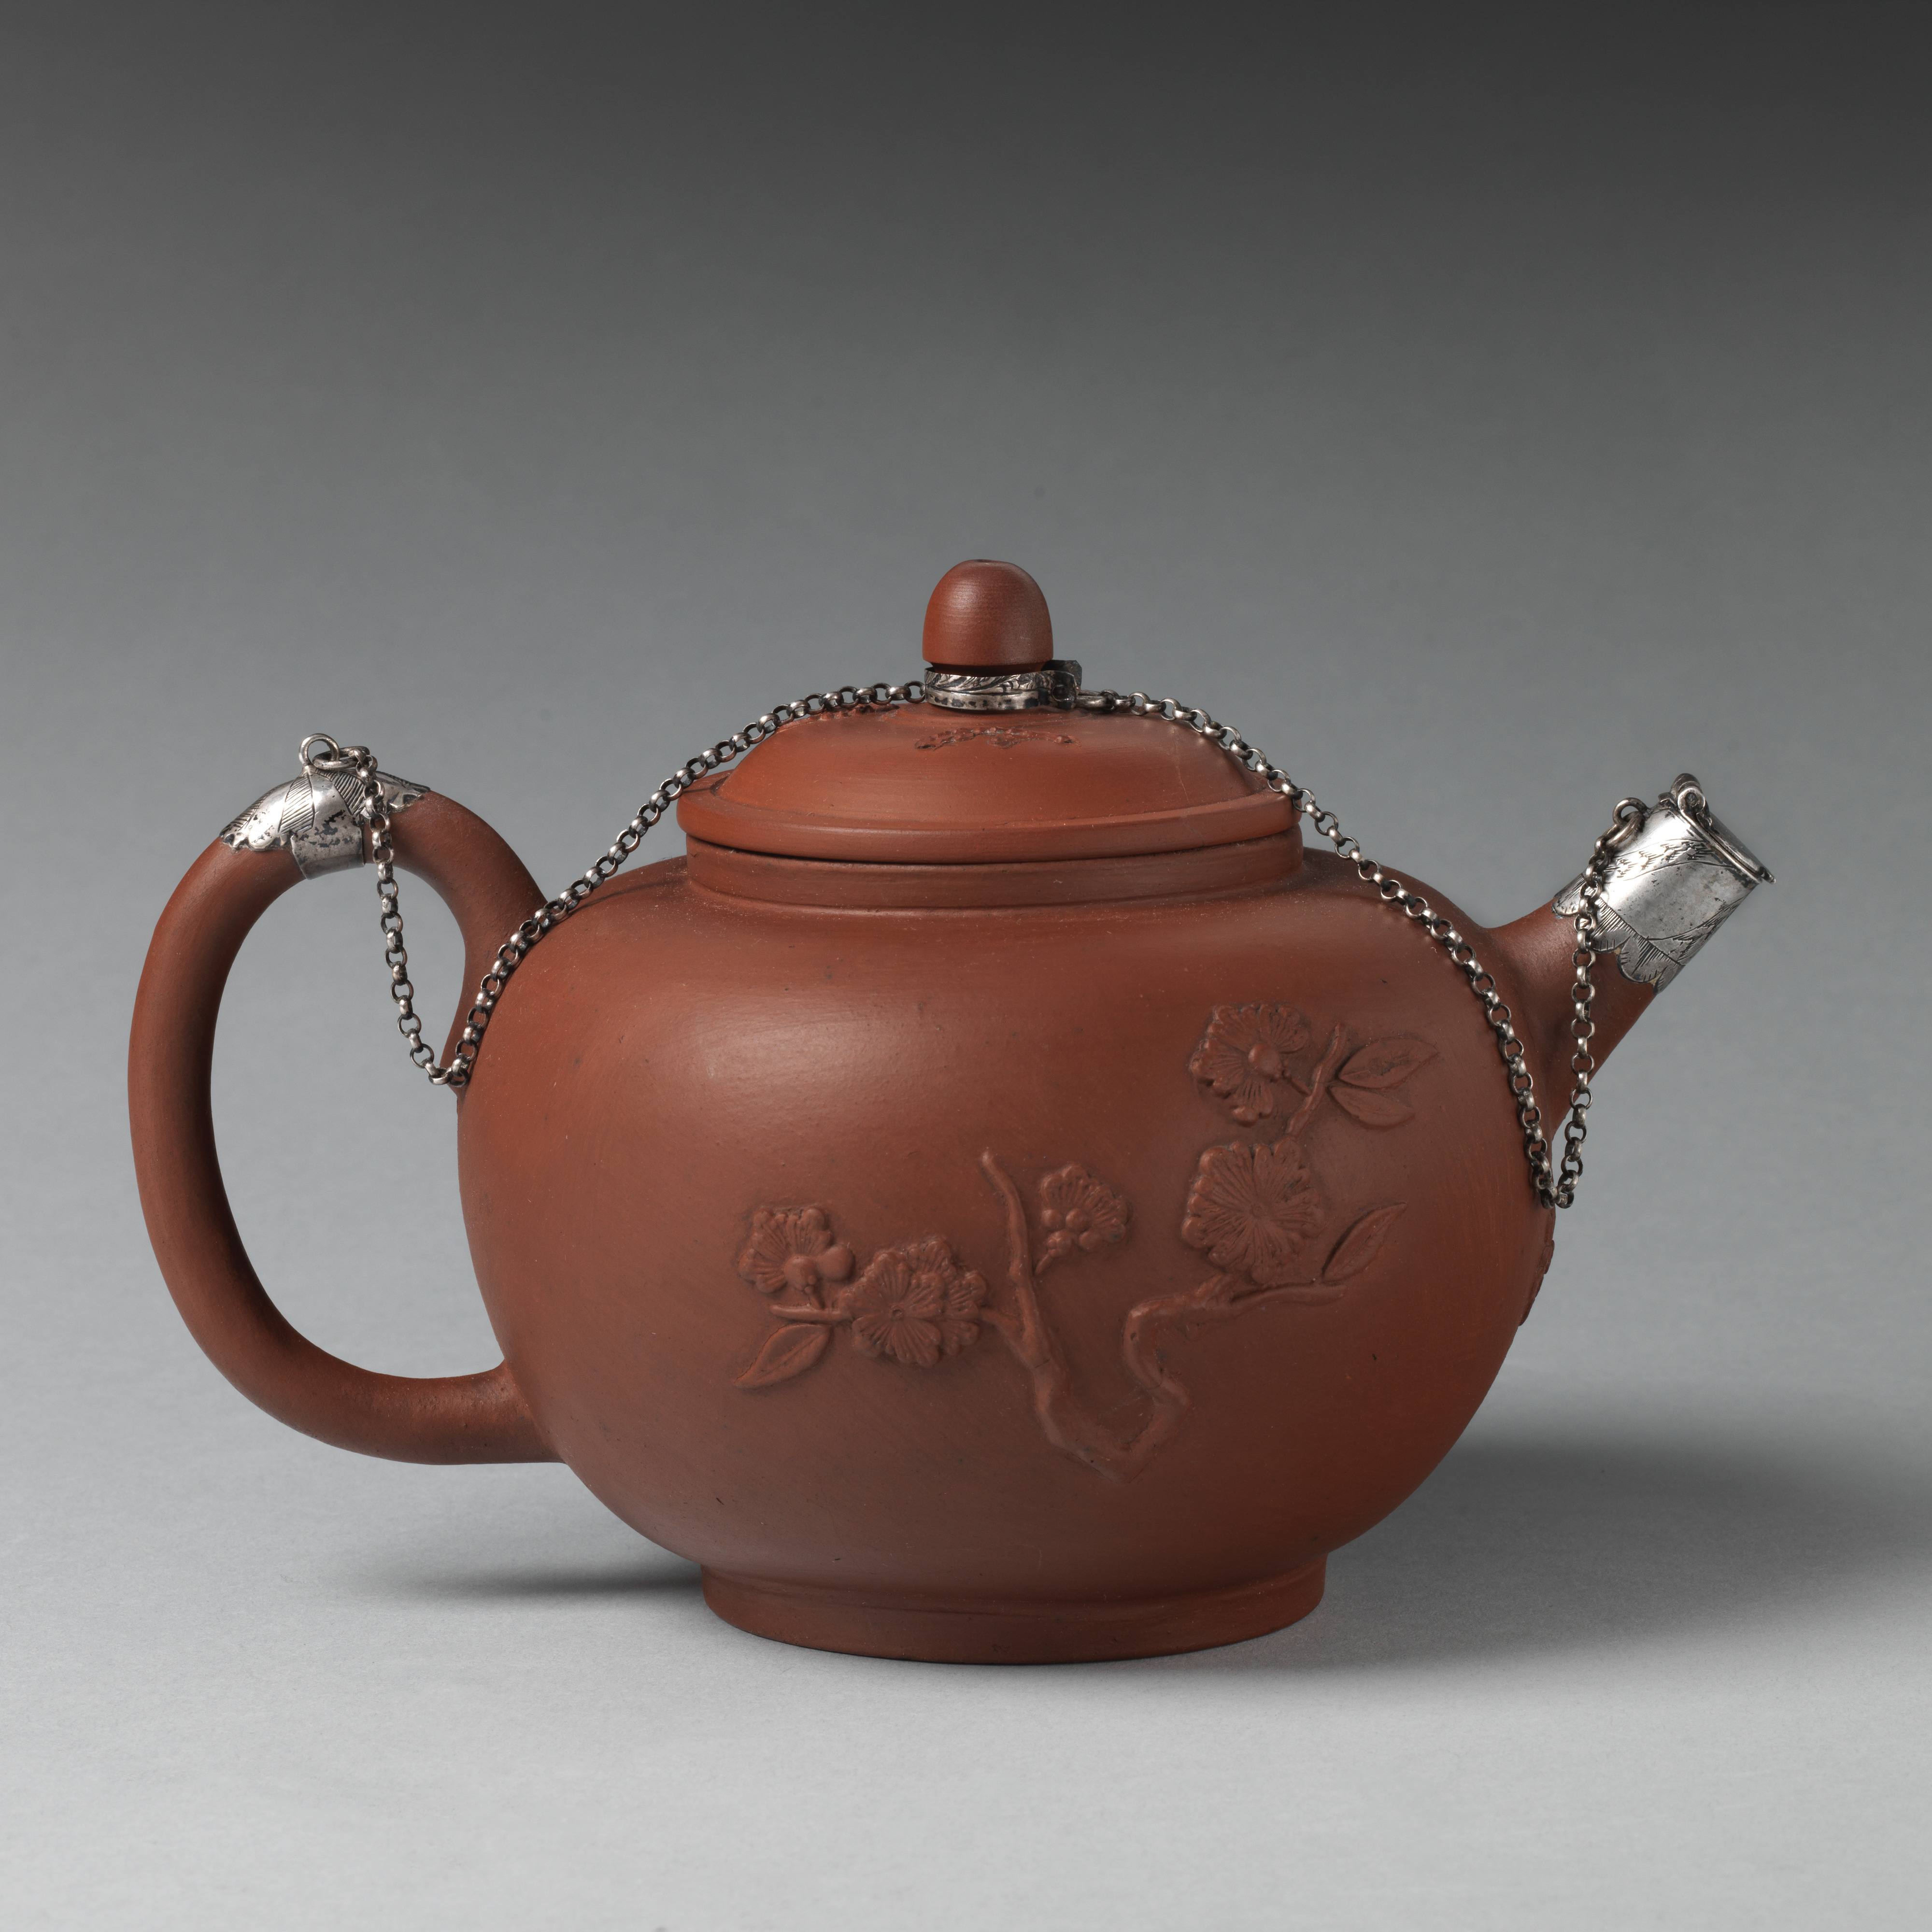 Teapot - Wikipedia